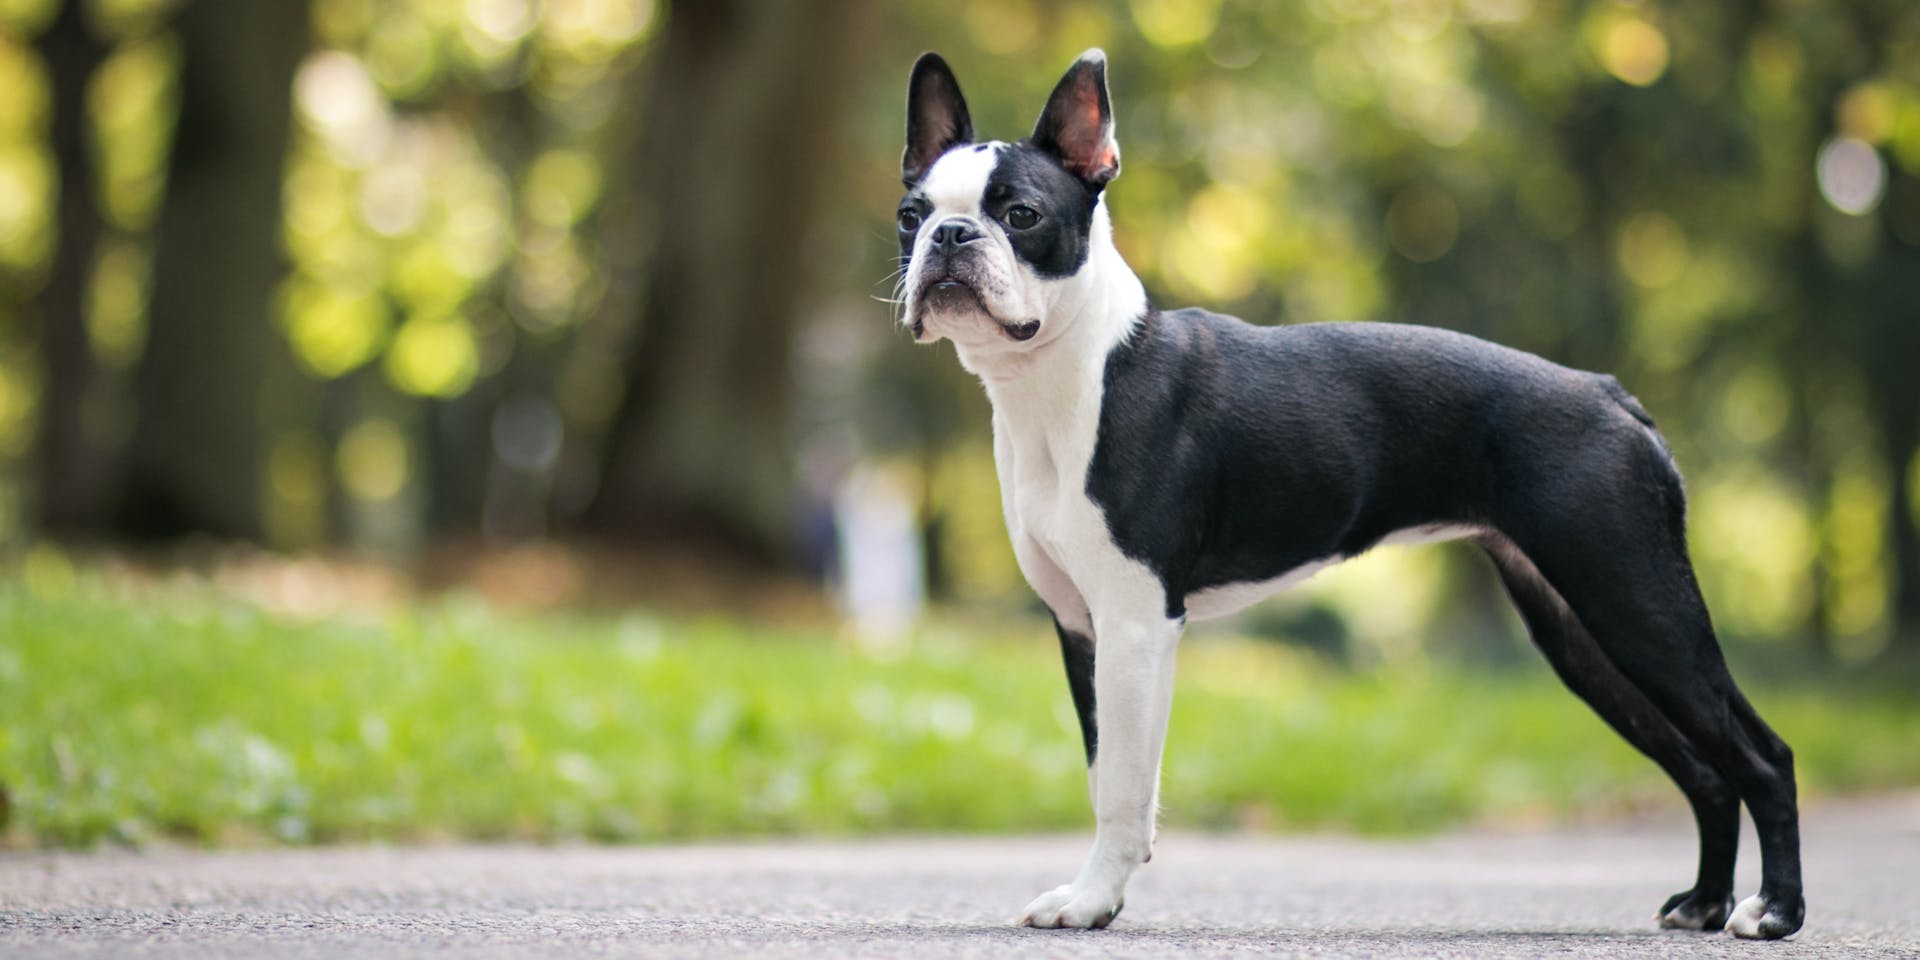 A Boston Terrier in a park